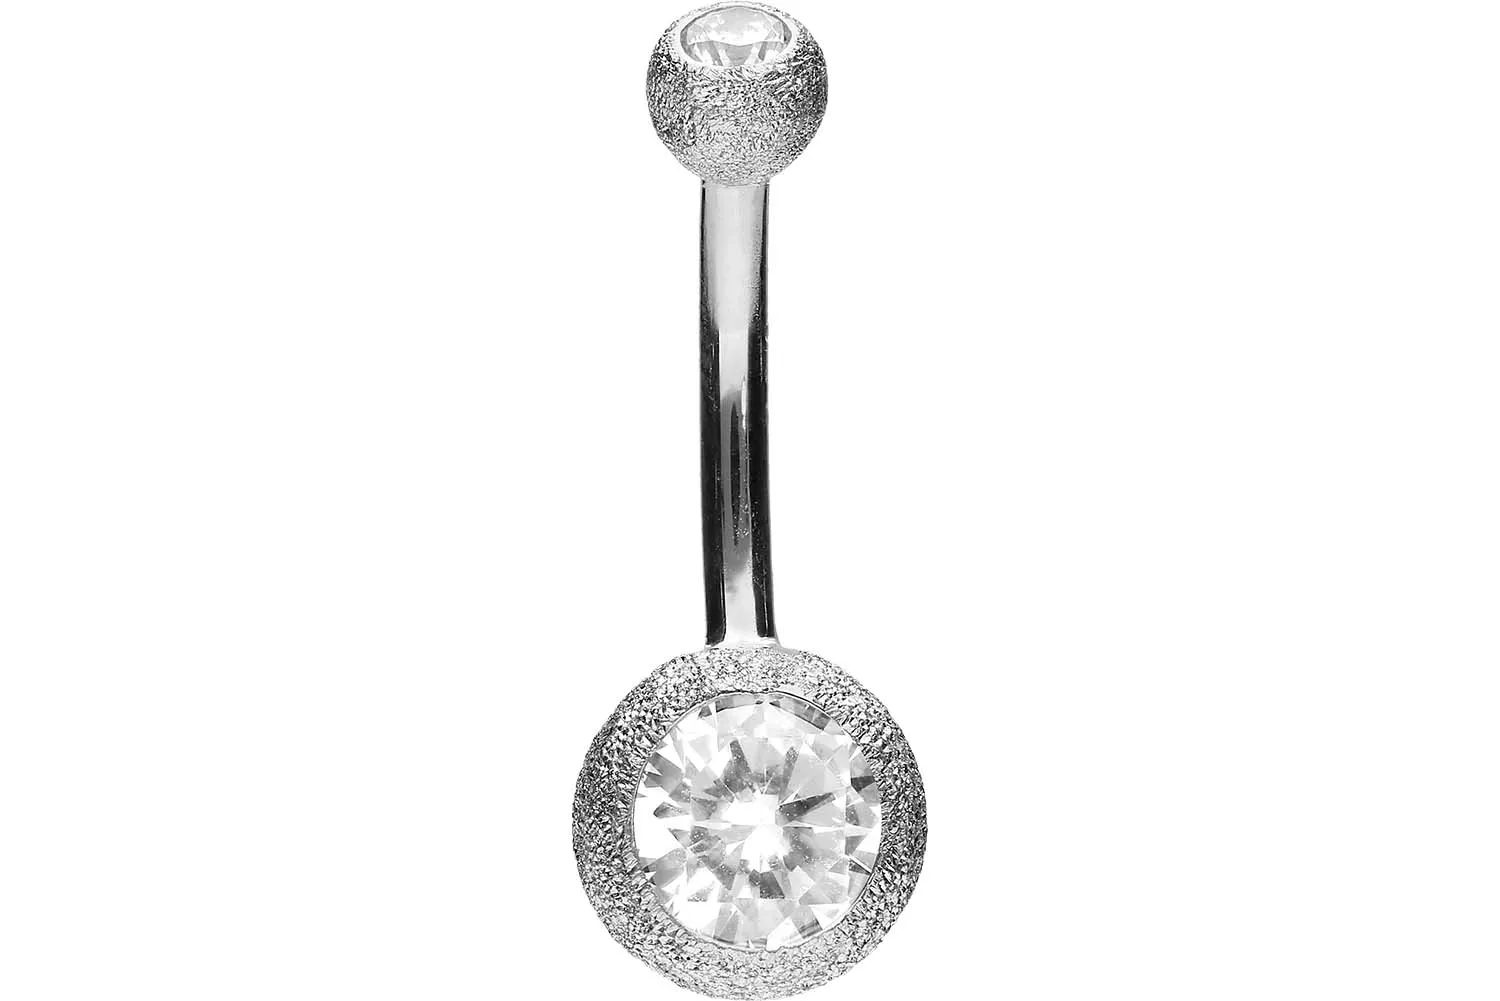 🦚 Bauchnabelpiercing 18karat Echtgold Weissgold Diamantoptik mit zwei Kristallkugeln